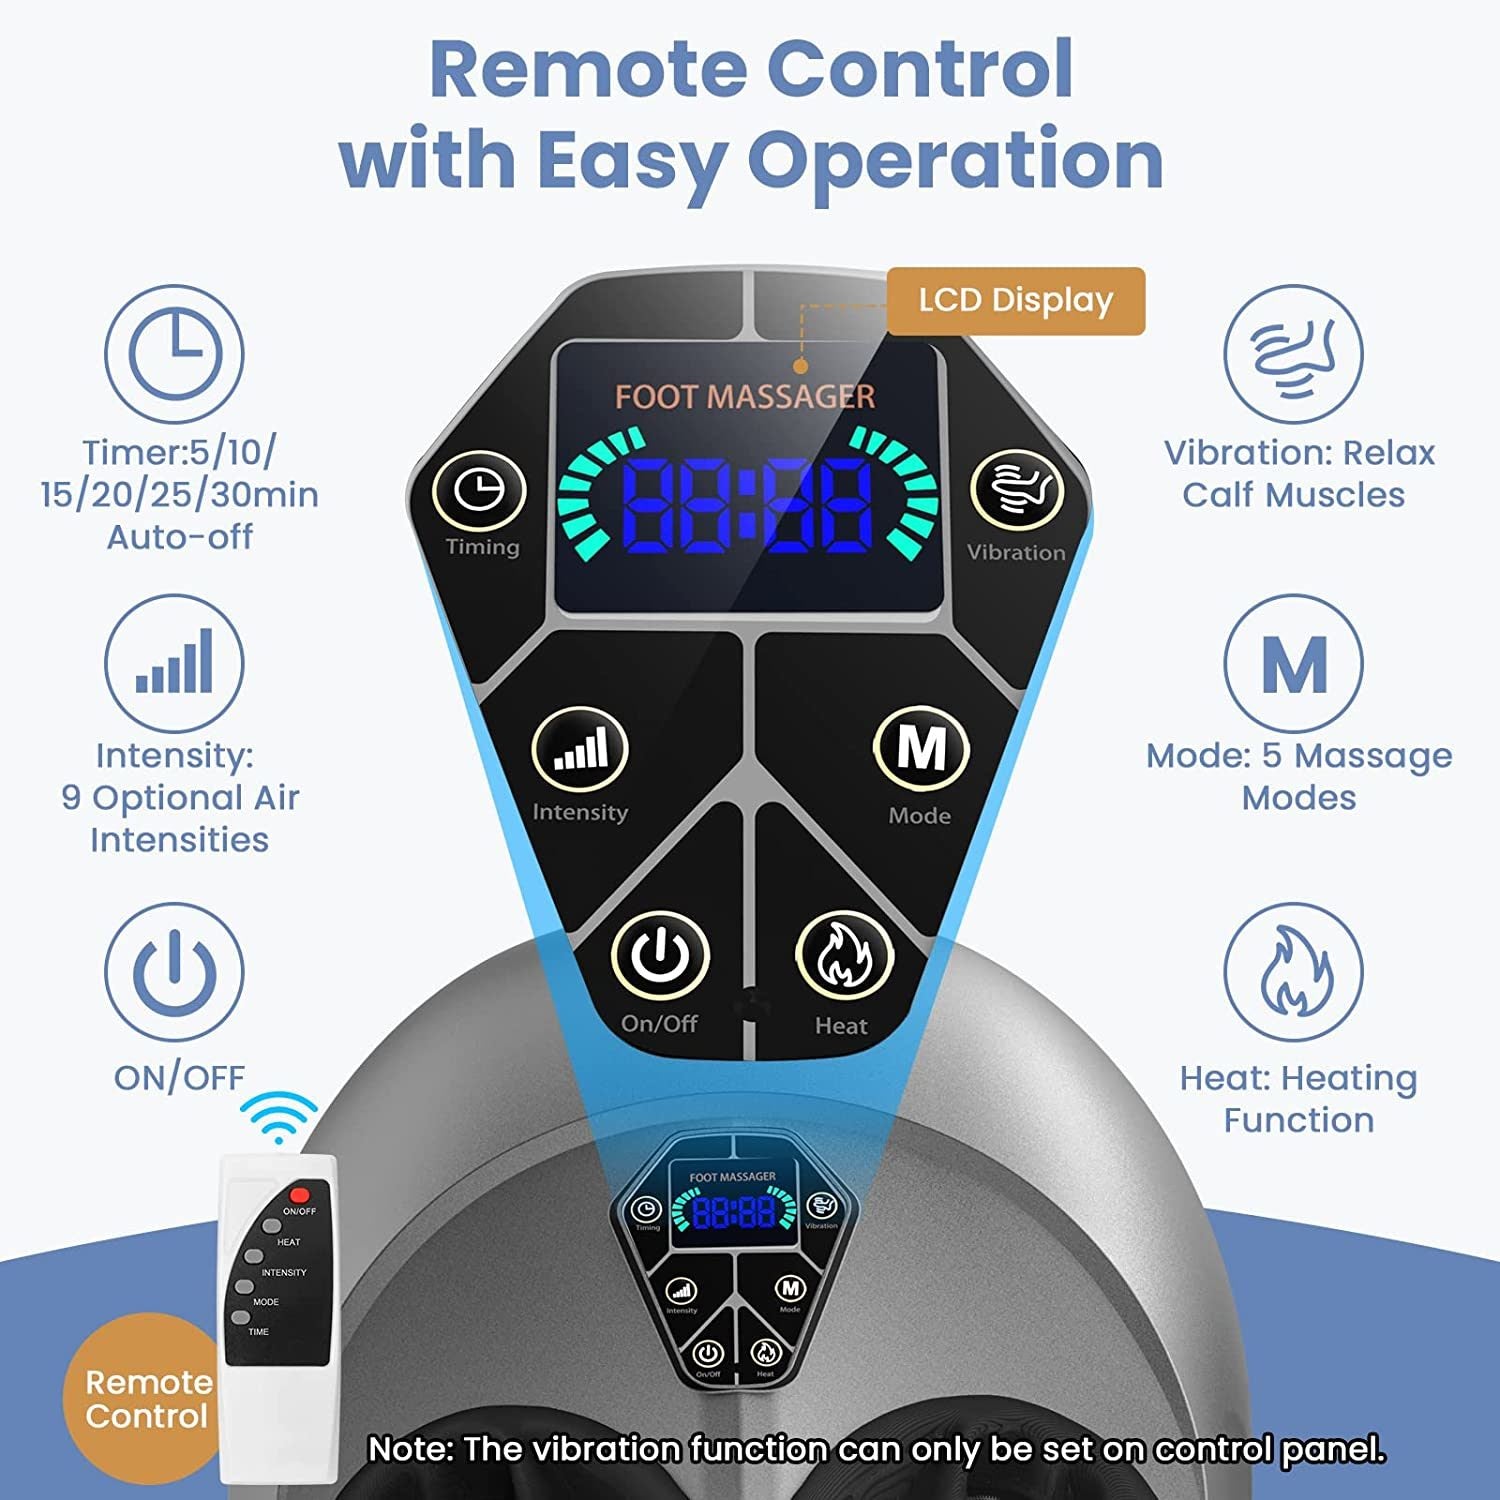 Image of remote control operation on Foot Massager Electric Shiatsu Machine